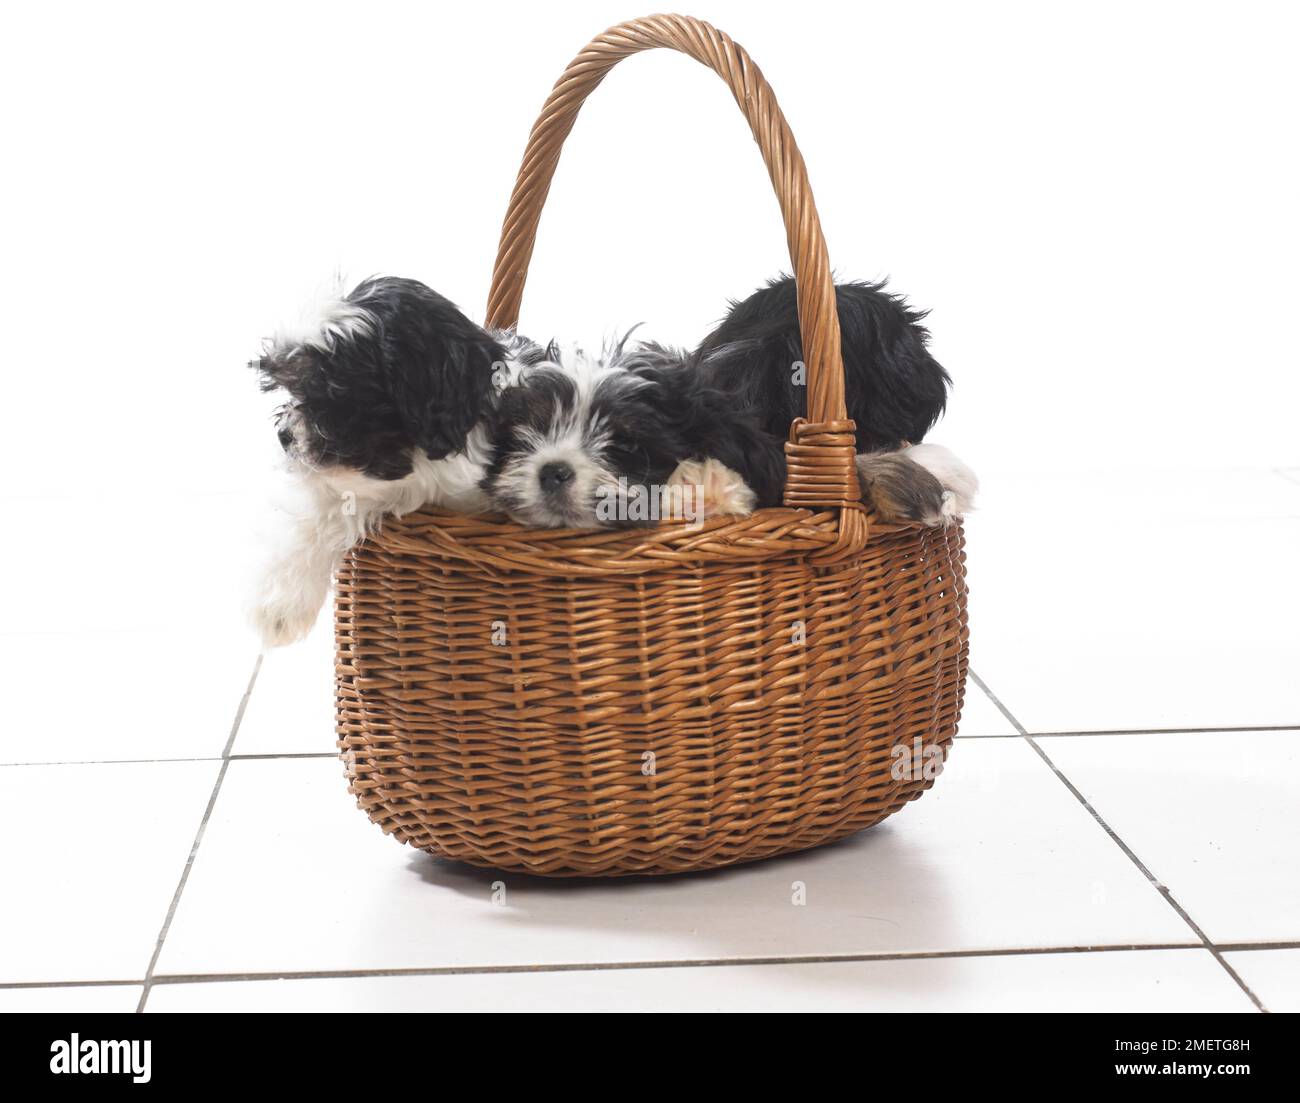 Three puppies sitting in wicker basket Stock Photo